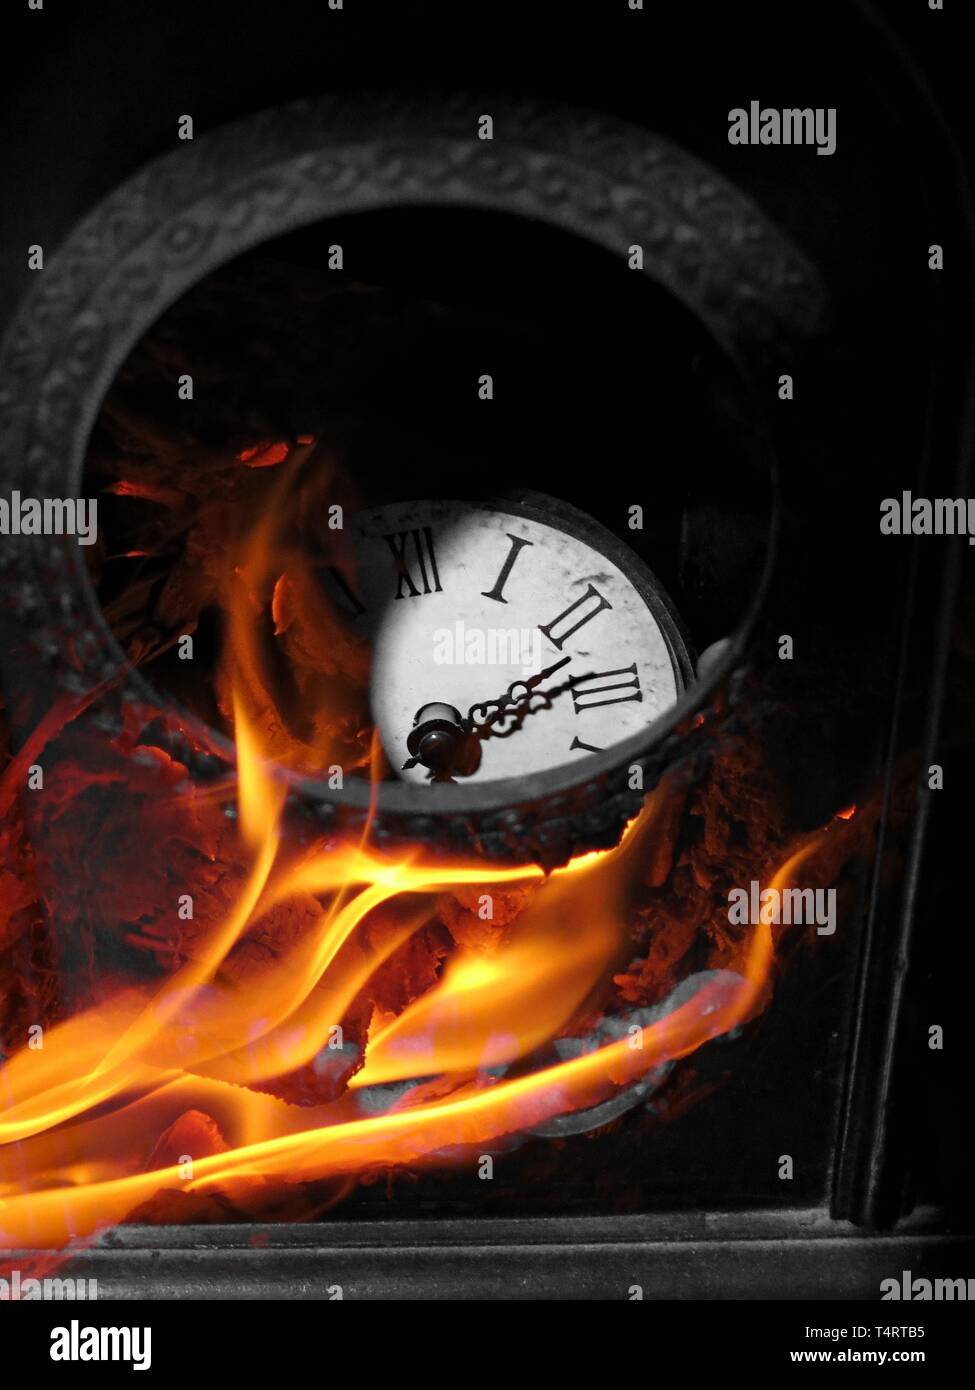 Broken antique clock on fire. Stock Photo